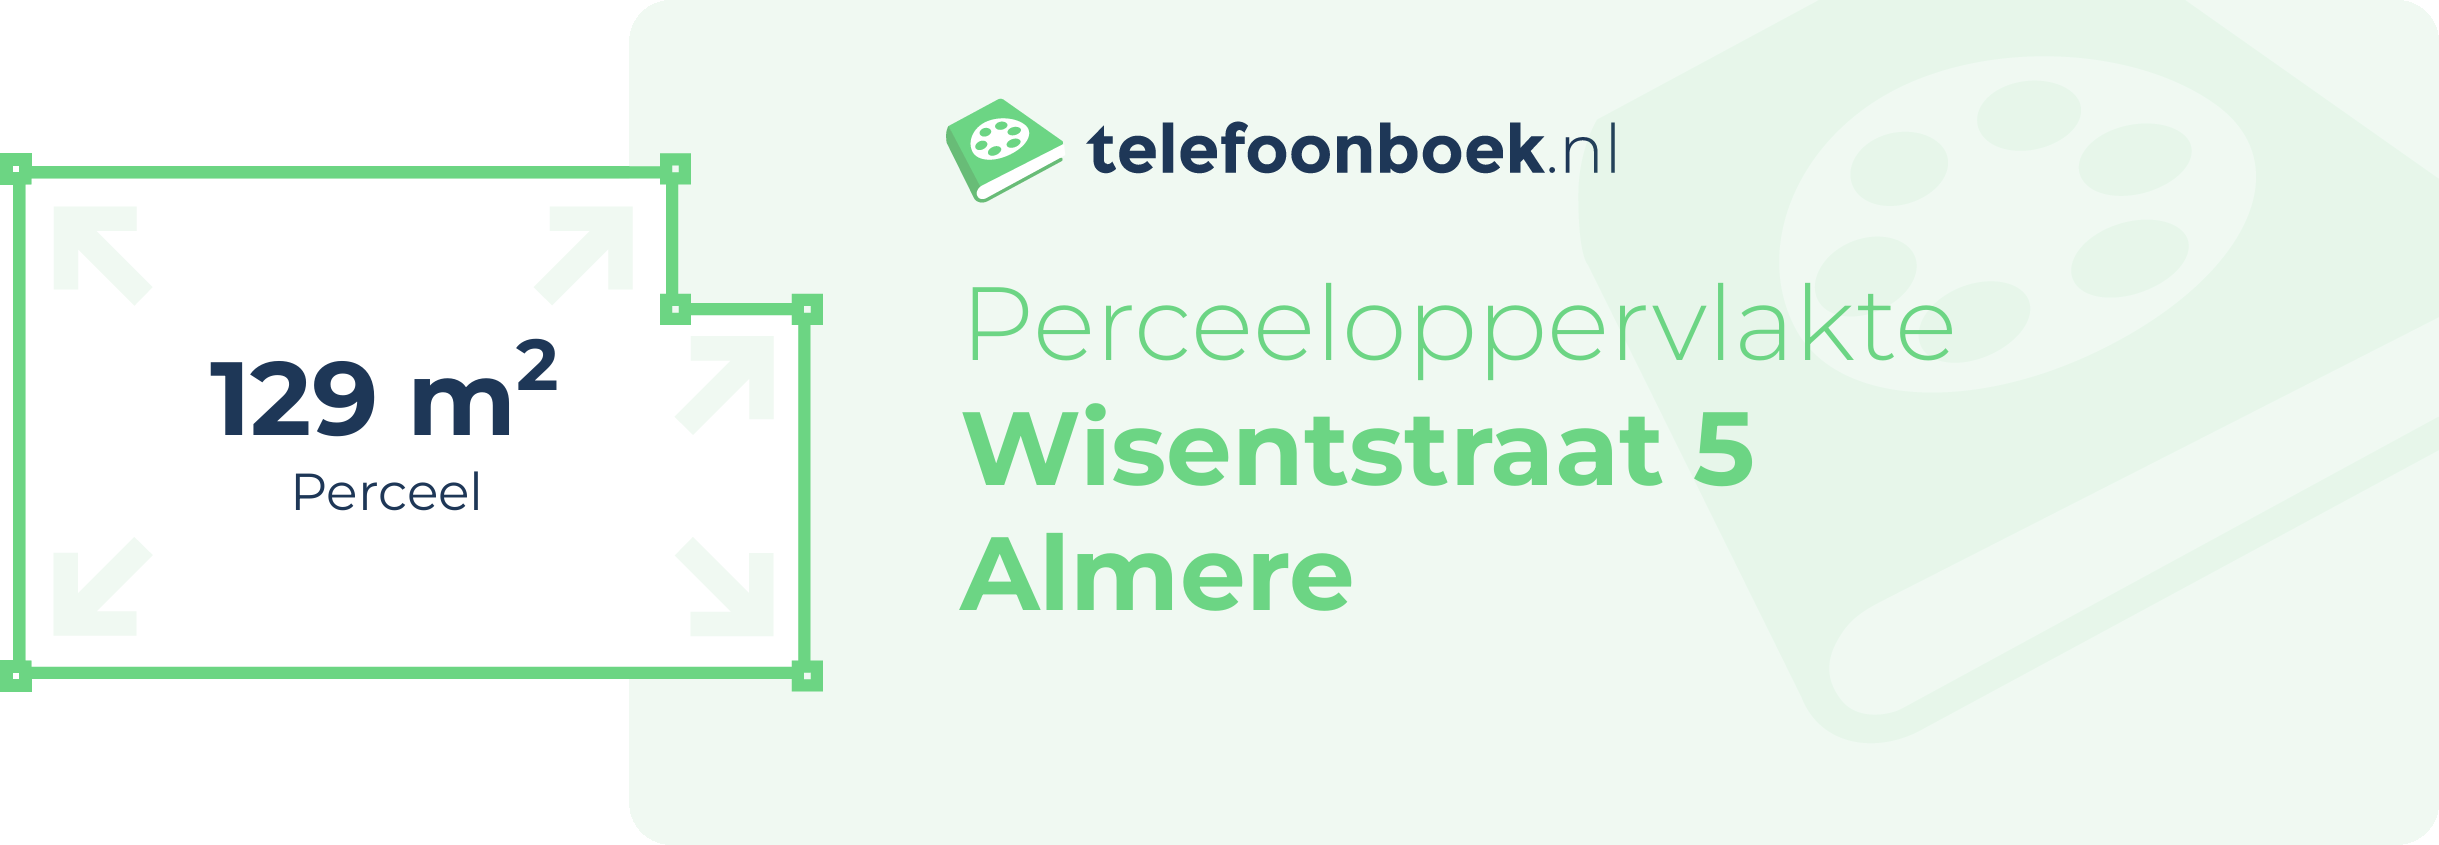 Perceeloppervlakte Wisentstraat 5 Almere